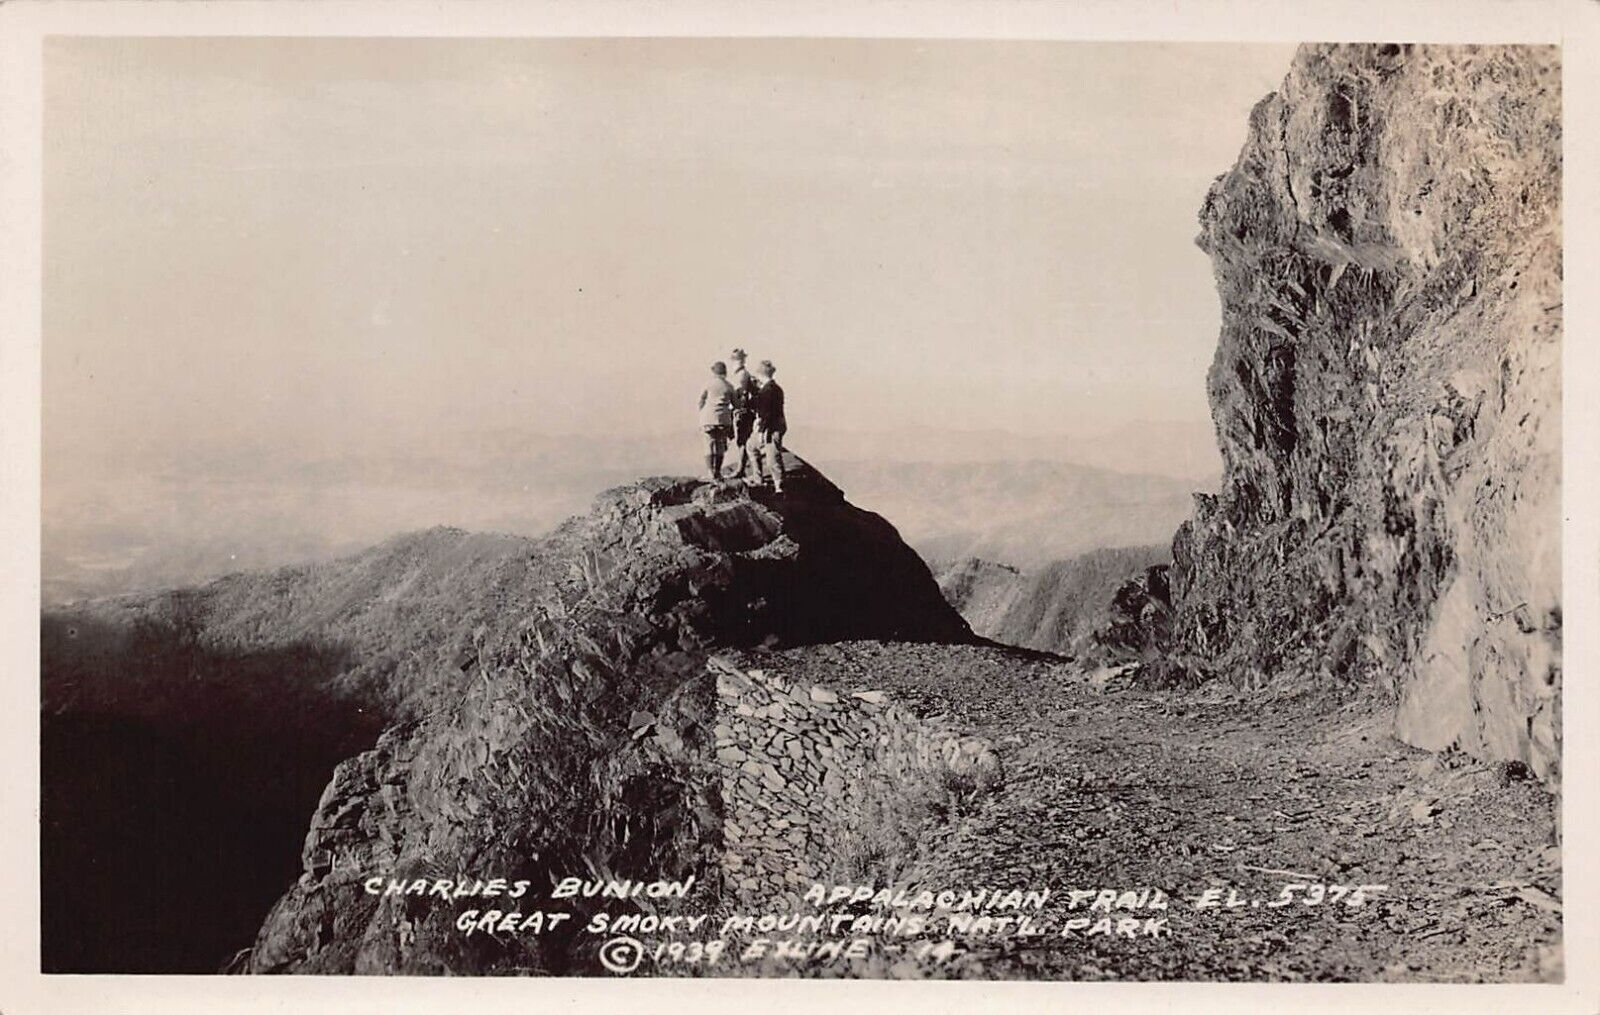 RPPC Charles Bunion Great Smoky Mountains Appalachian Trail Photo Postcard L8